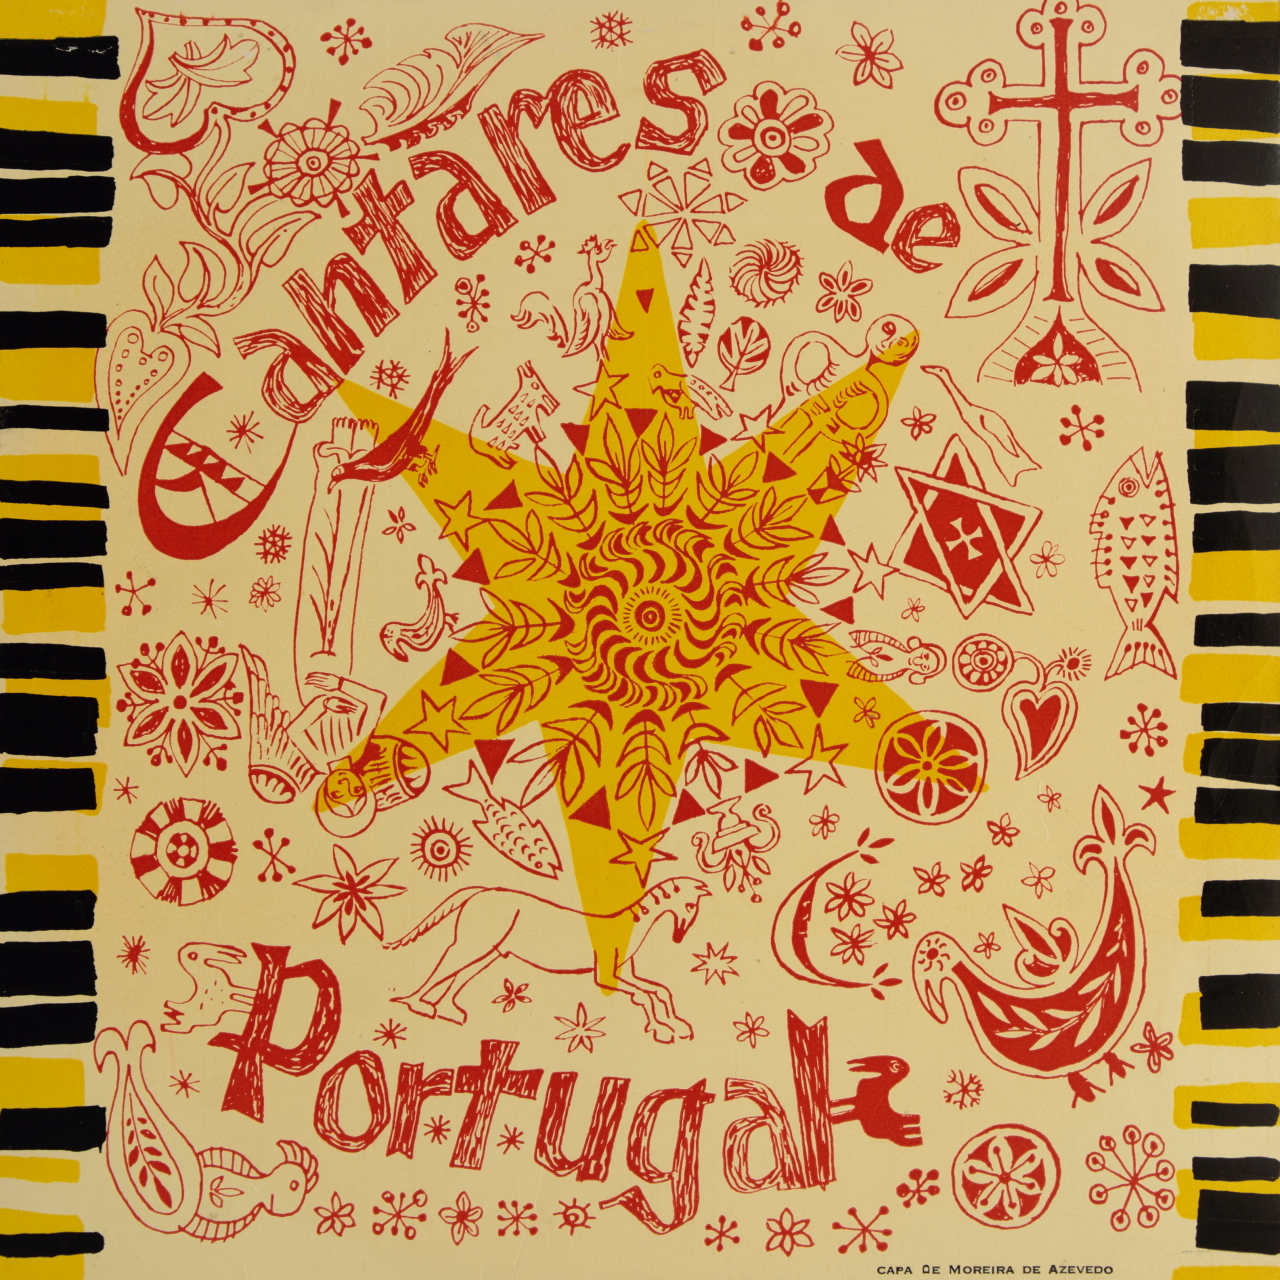 Cantares de Portugal